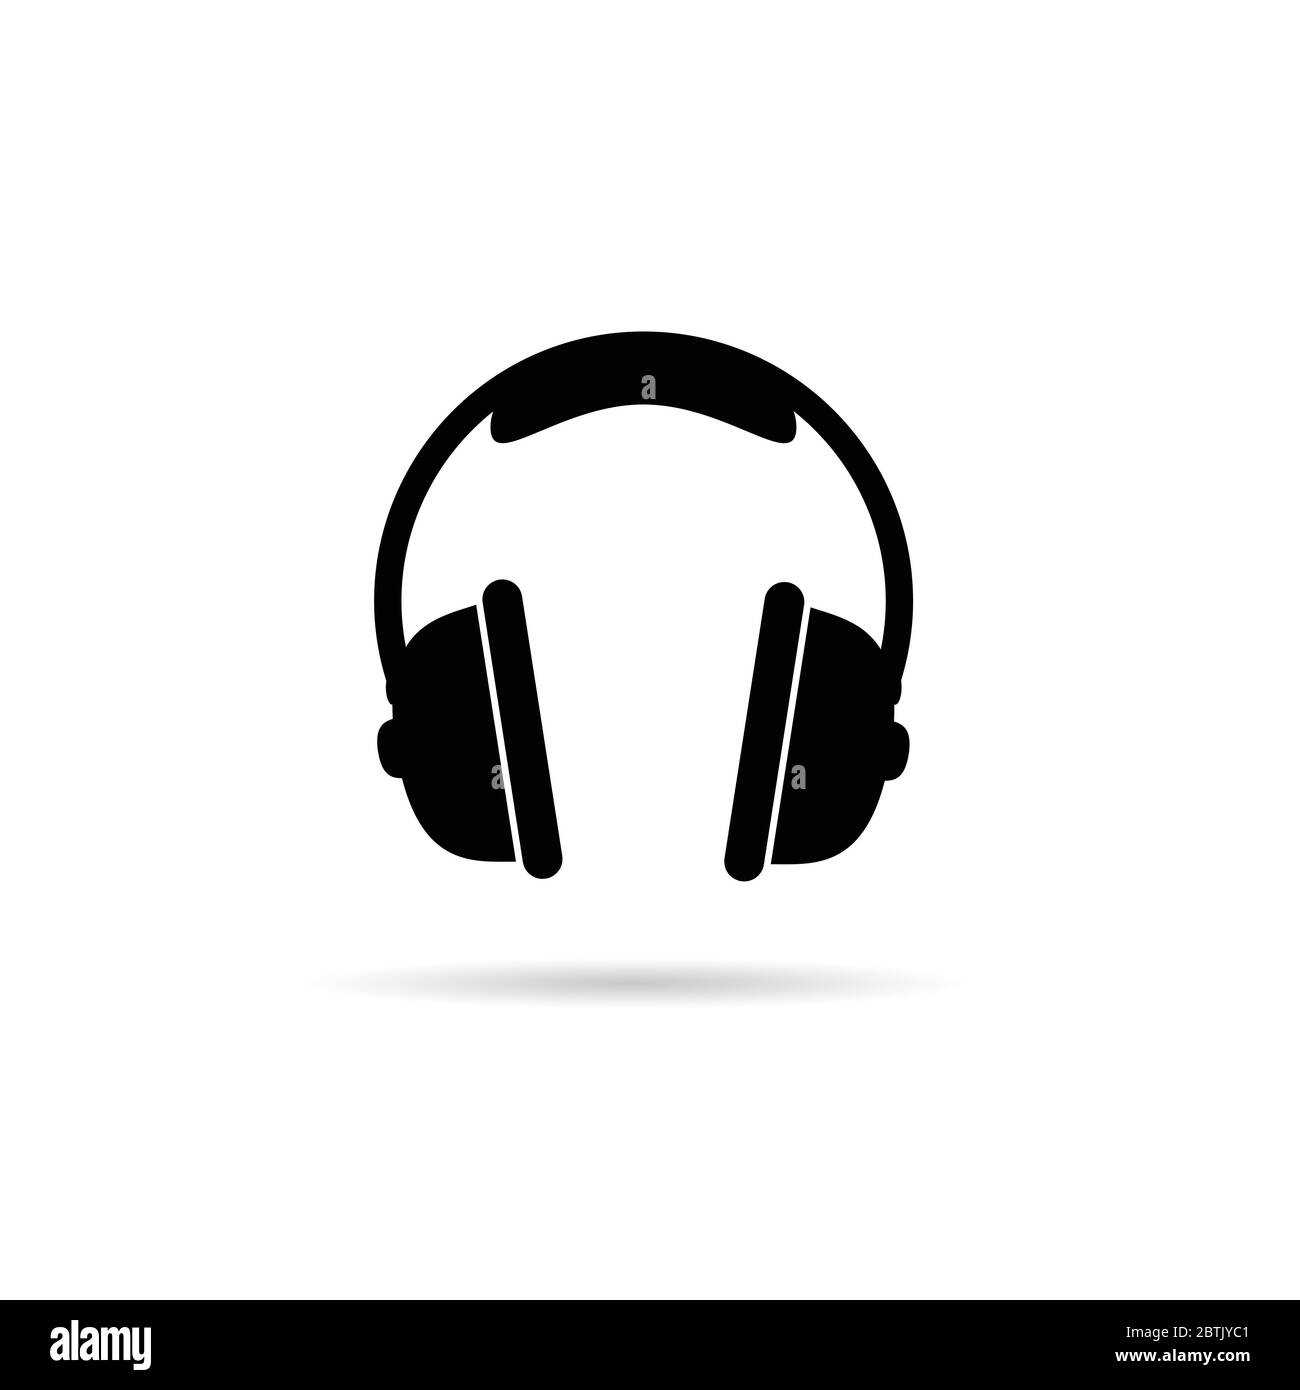 headphones black and white vector illustration Stock Vector